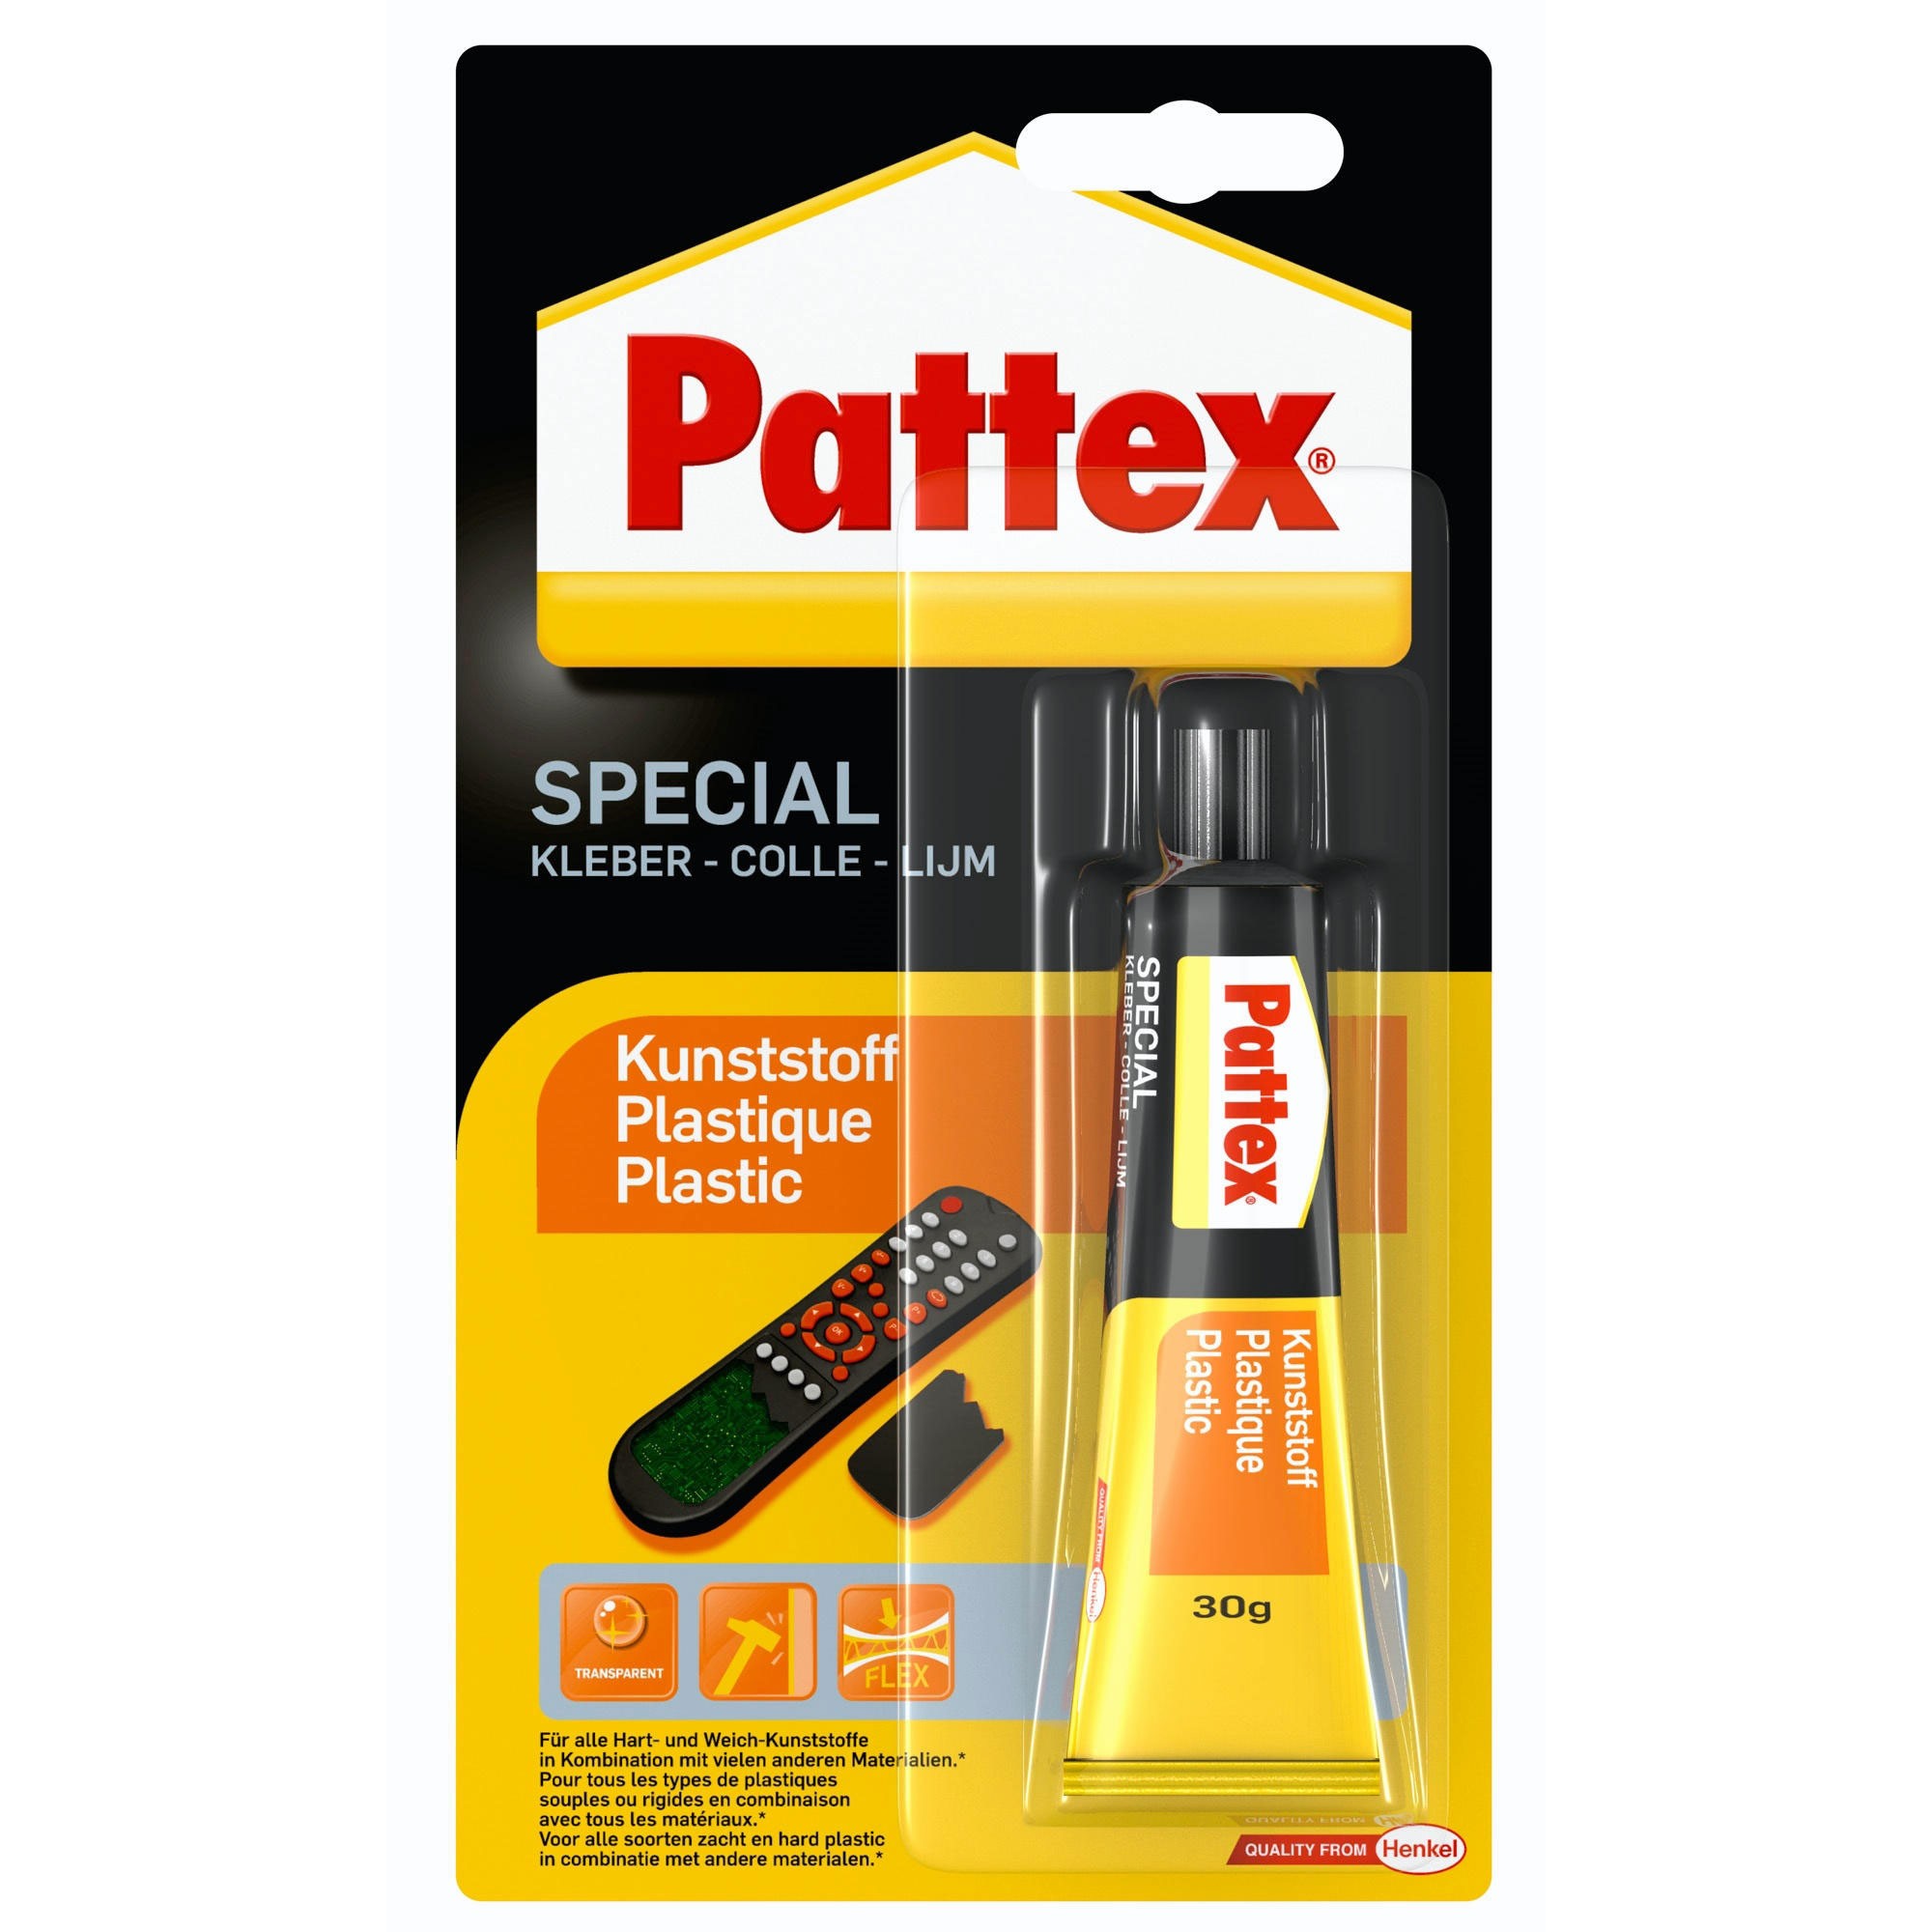 sponsor Netelig briefpapier Pattex Special plasticlijm